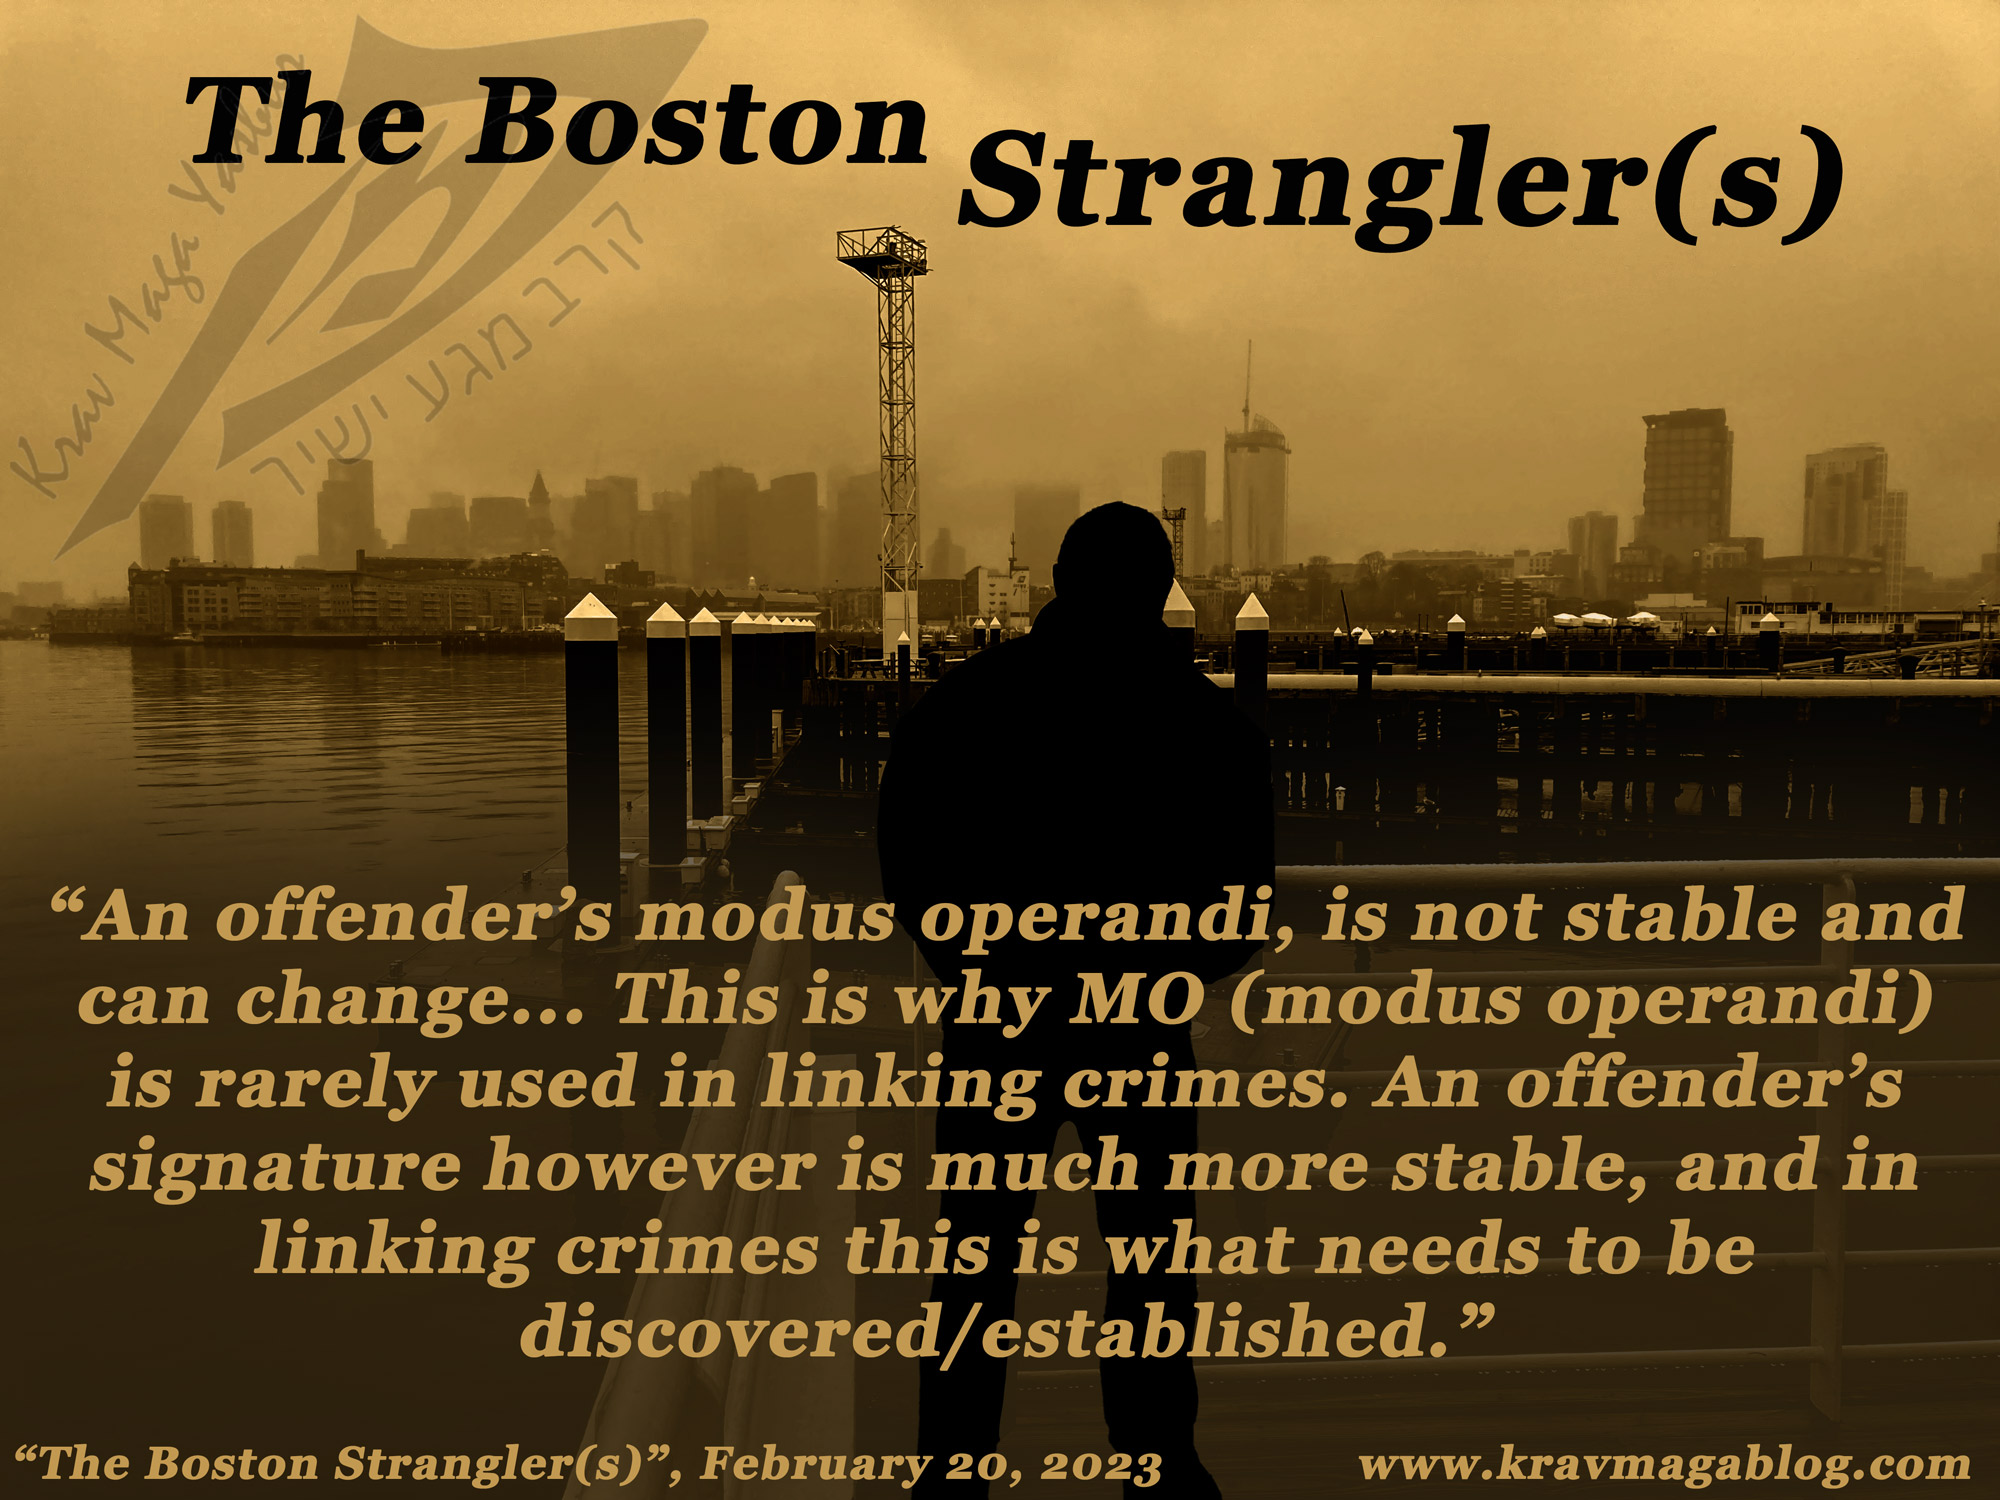 Blog About The Boston Strangler(s)